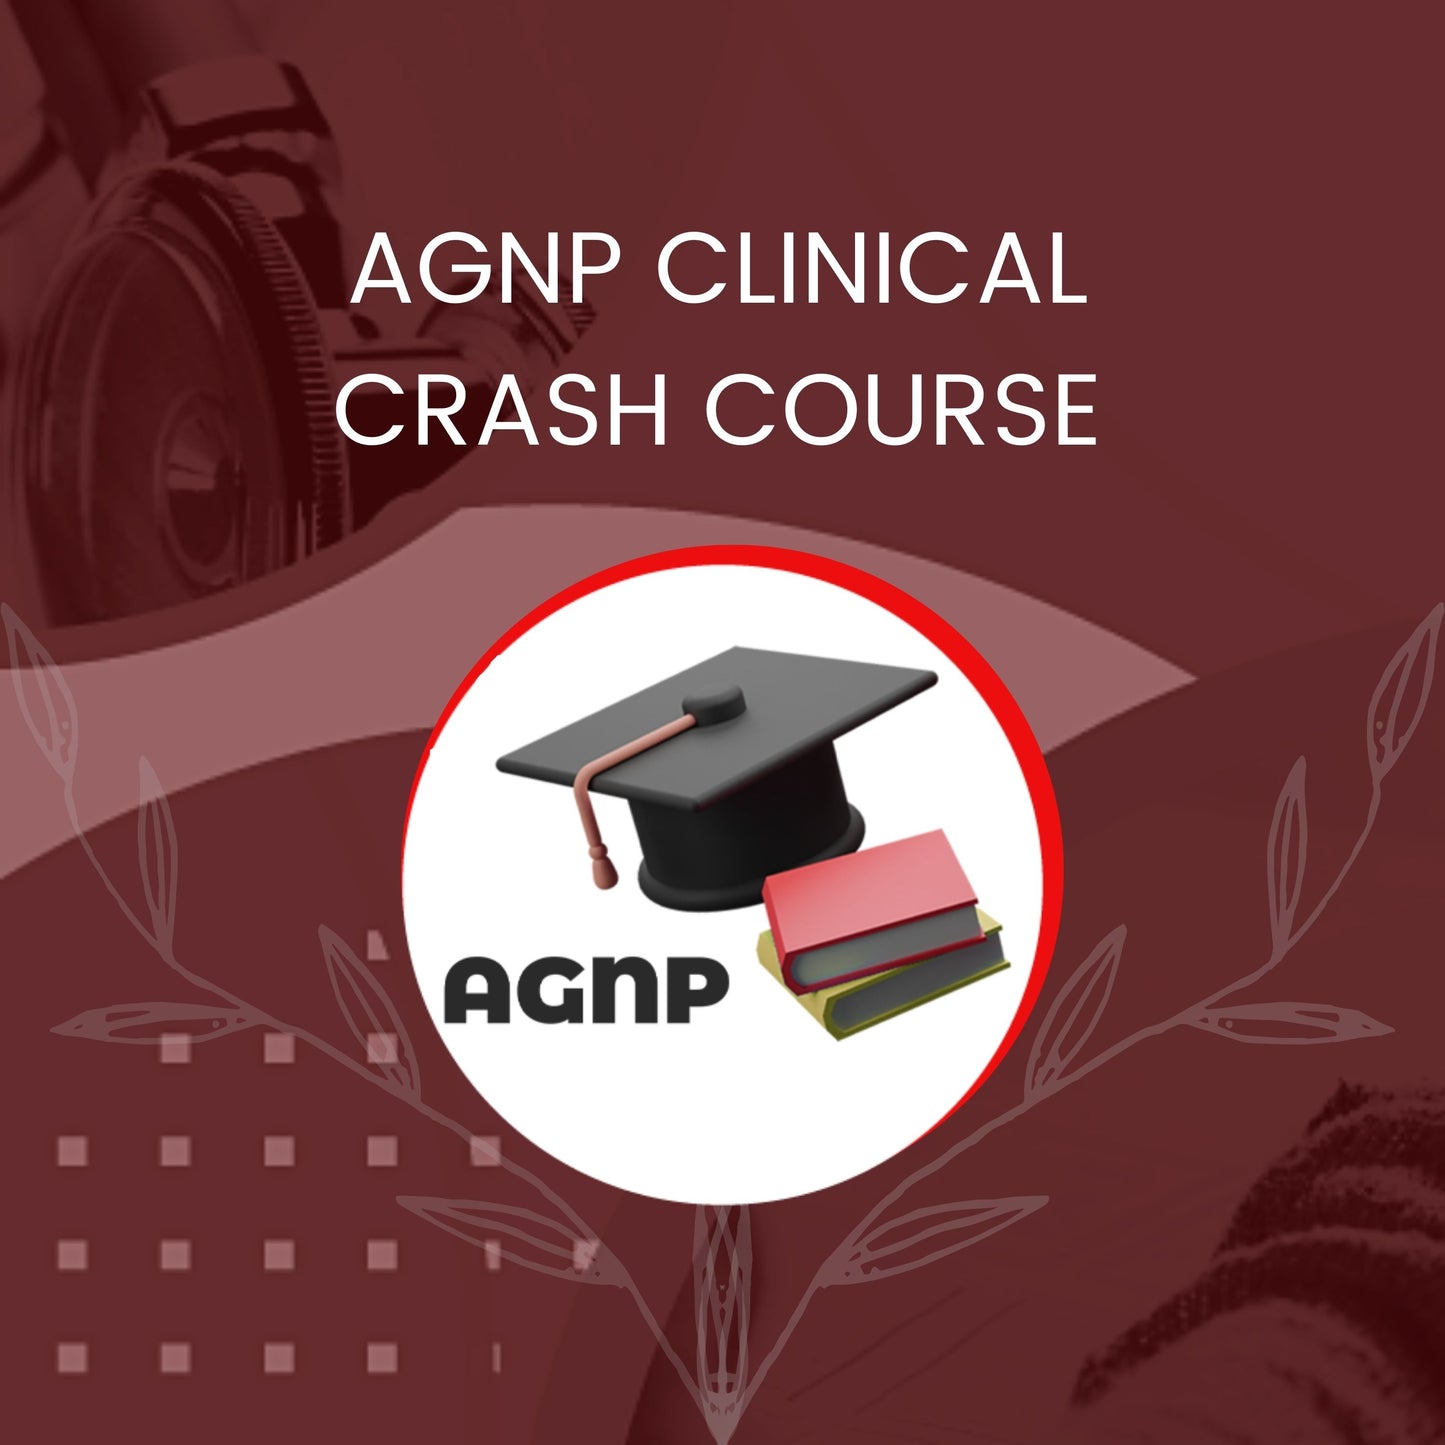 AGNP Clinical Crash Course